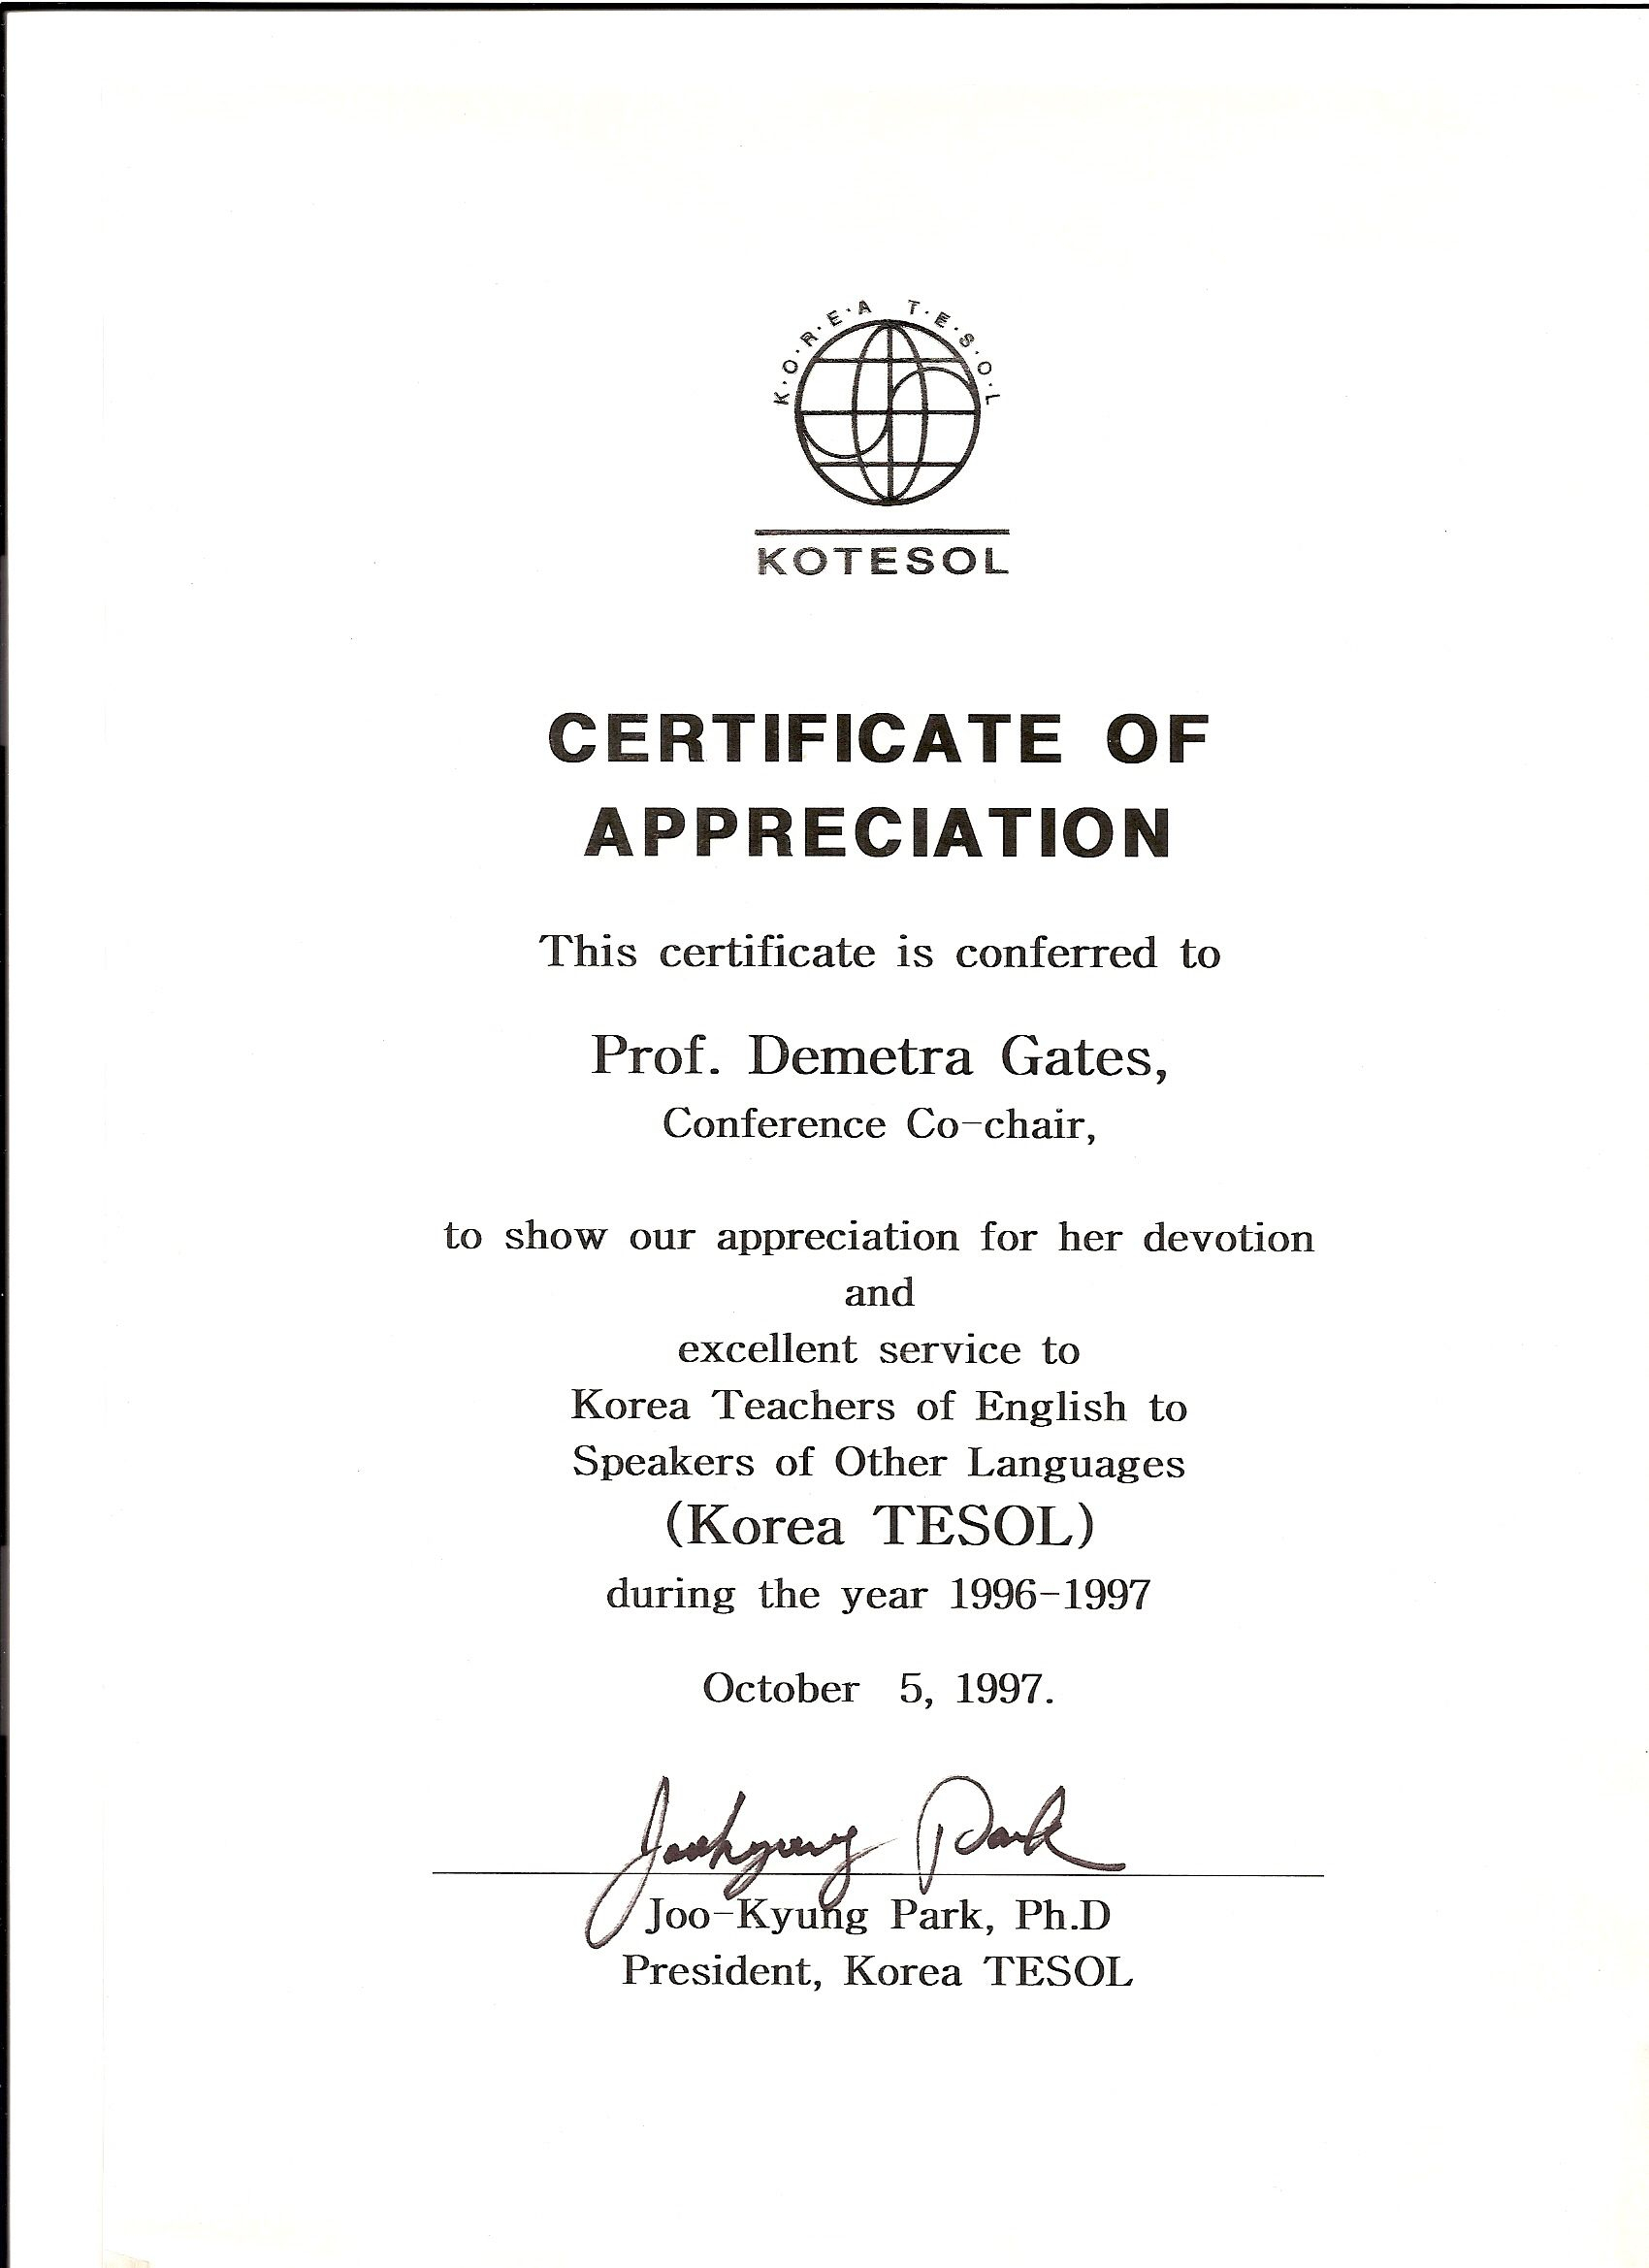 Kotesol Presidential Certificate Of Appreciation (1997 Intended For Army Certificate Of Appreciation Template